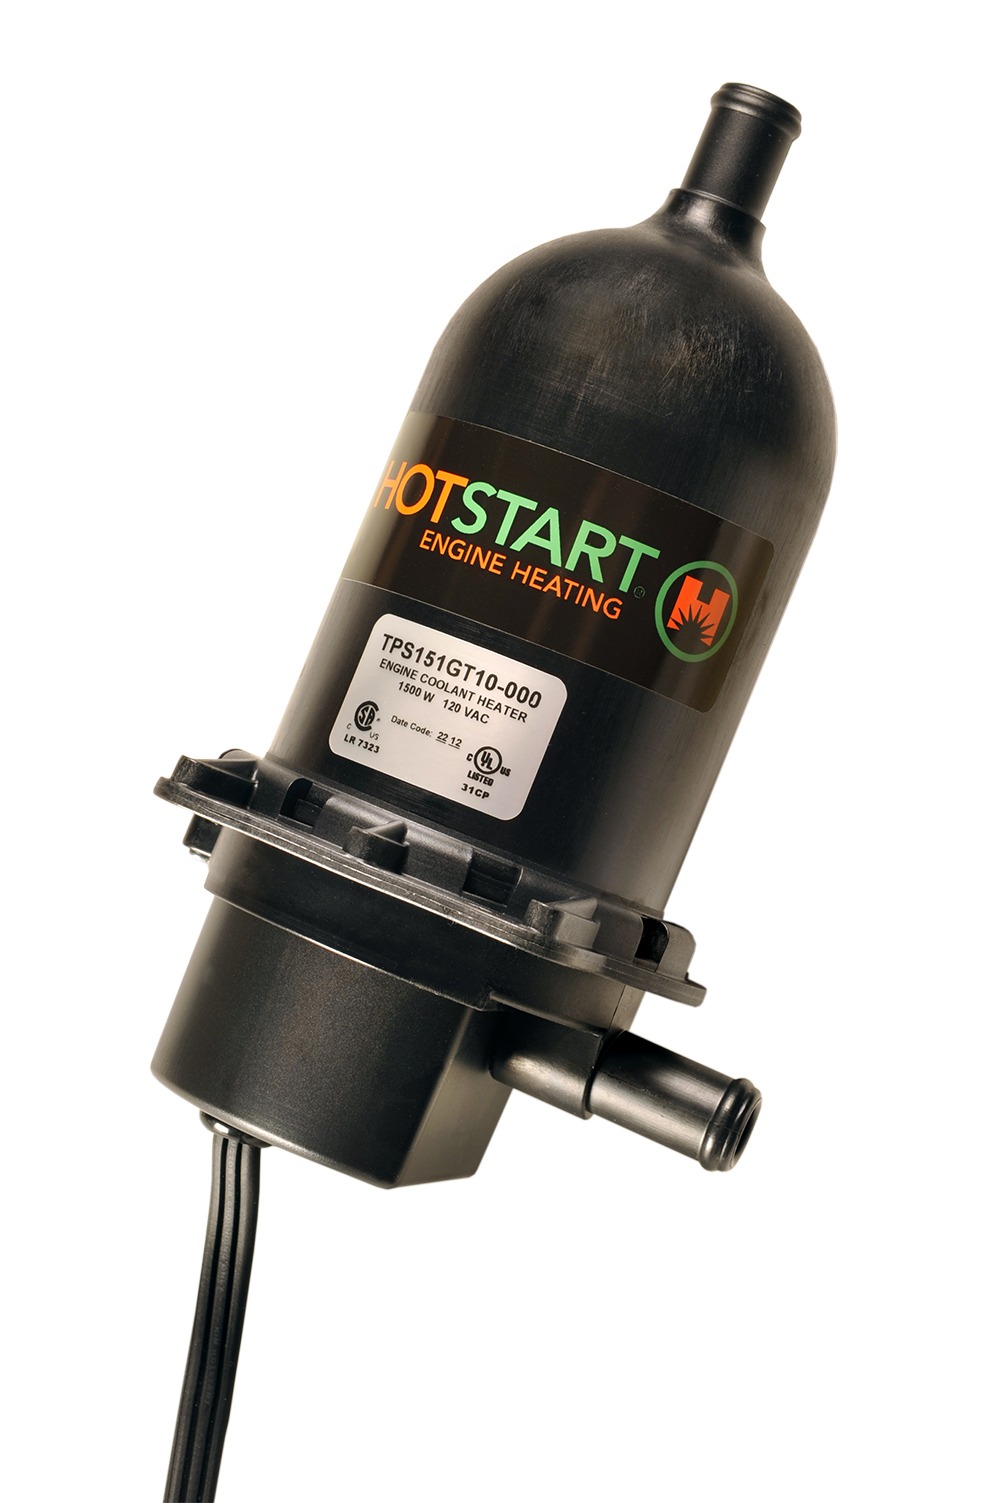 Hotstart Engine Block Heater TPS107GT10-000 1000W 277V Temp Range 100-120 F